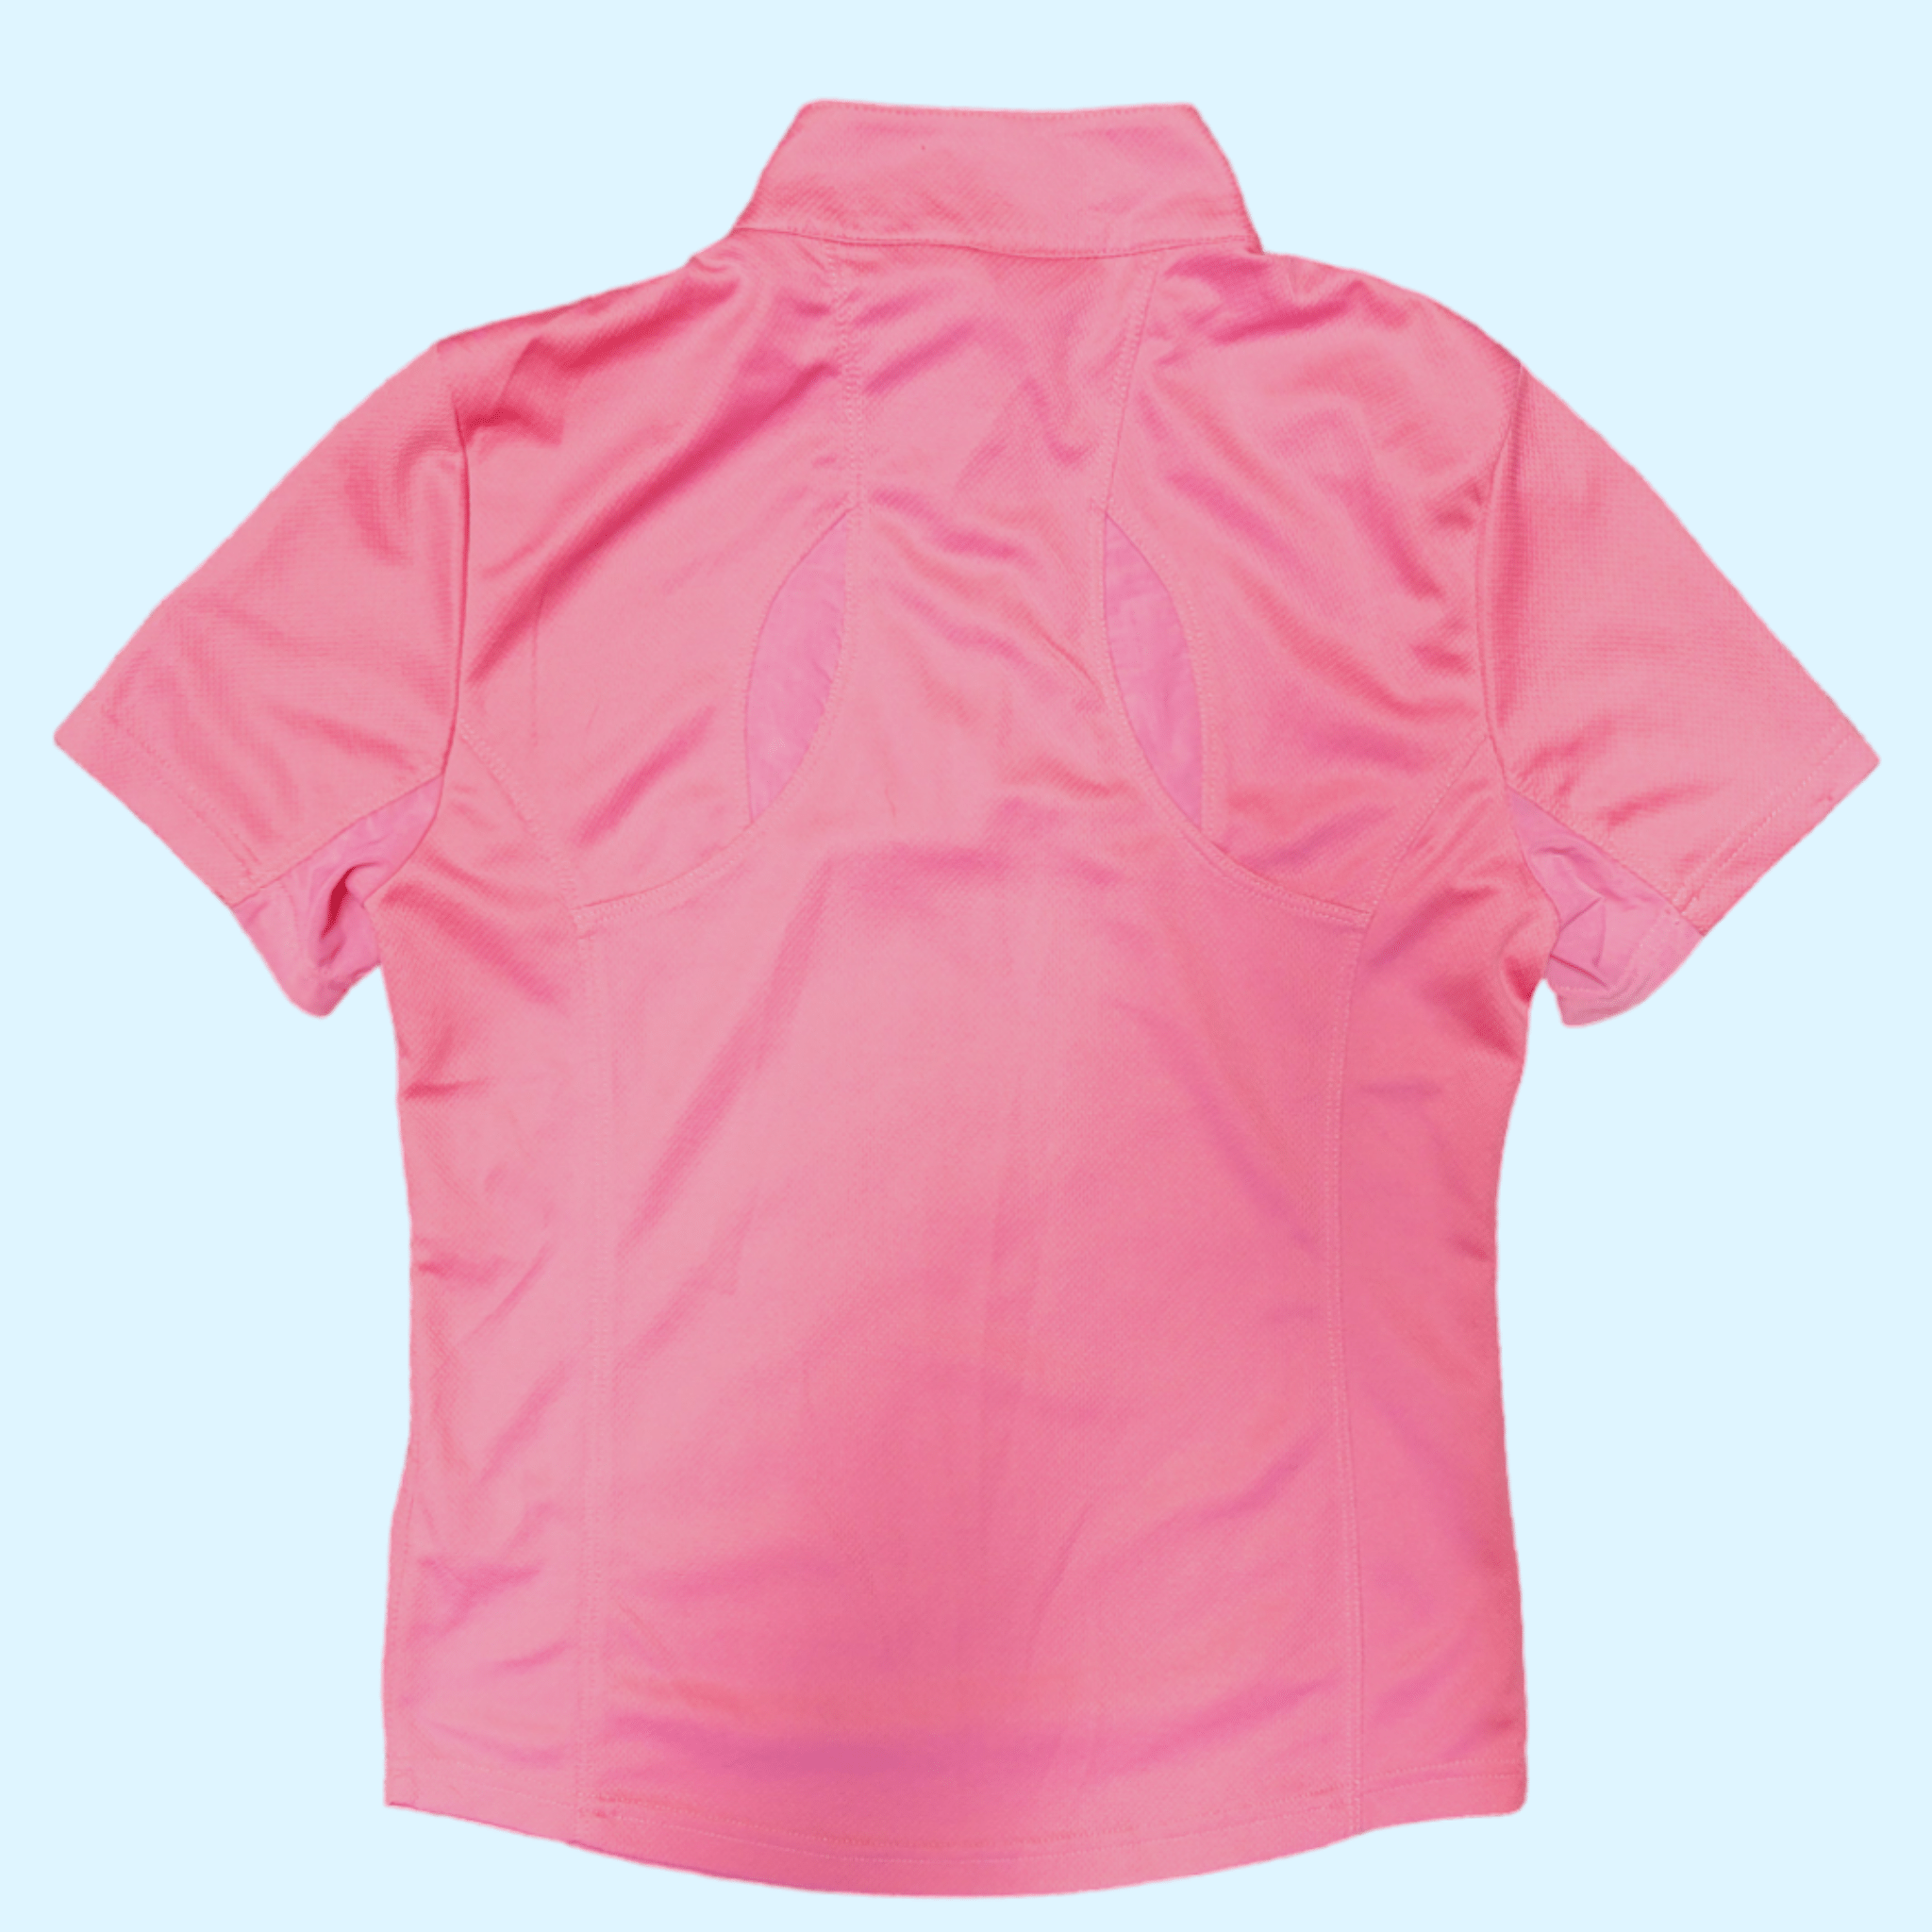 Ovation Children's Short Sleeve Sun Shirt in Confetti Pink - CH XL